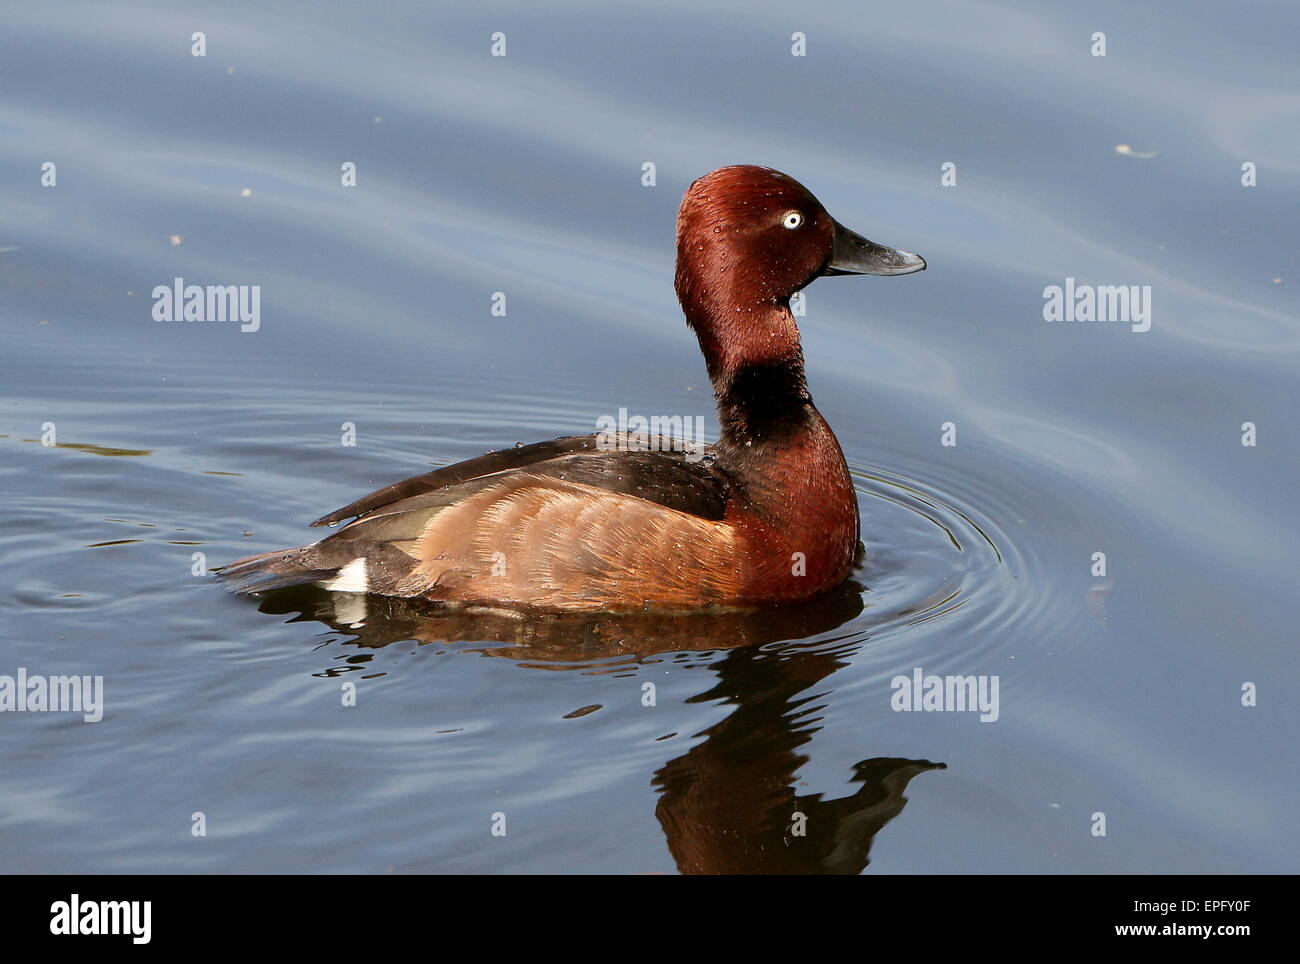 Eurasian Ferruginous duck or pochard (Aythya nyroca) seen in profile while swimming Stock Photo